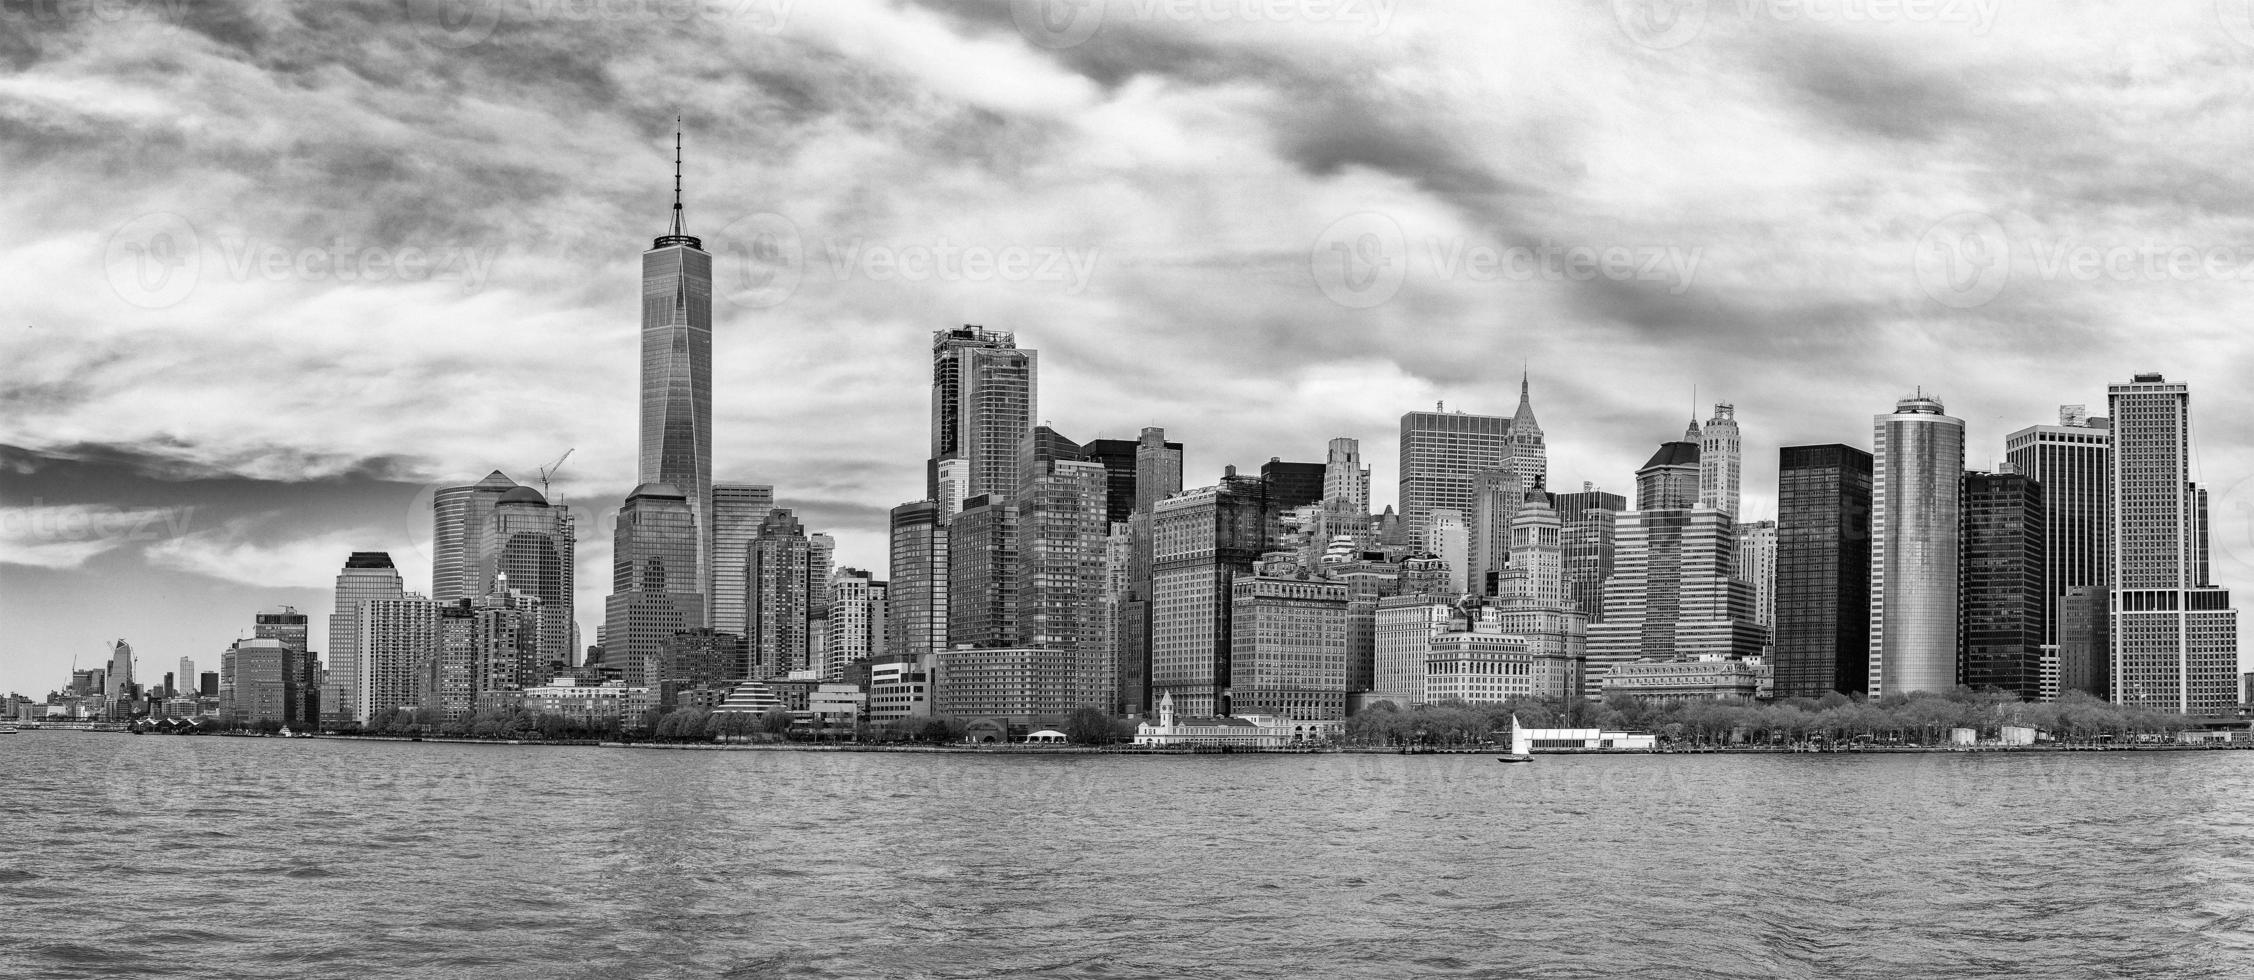 New York Manhattan Panorama landscape in black and white photo